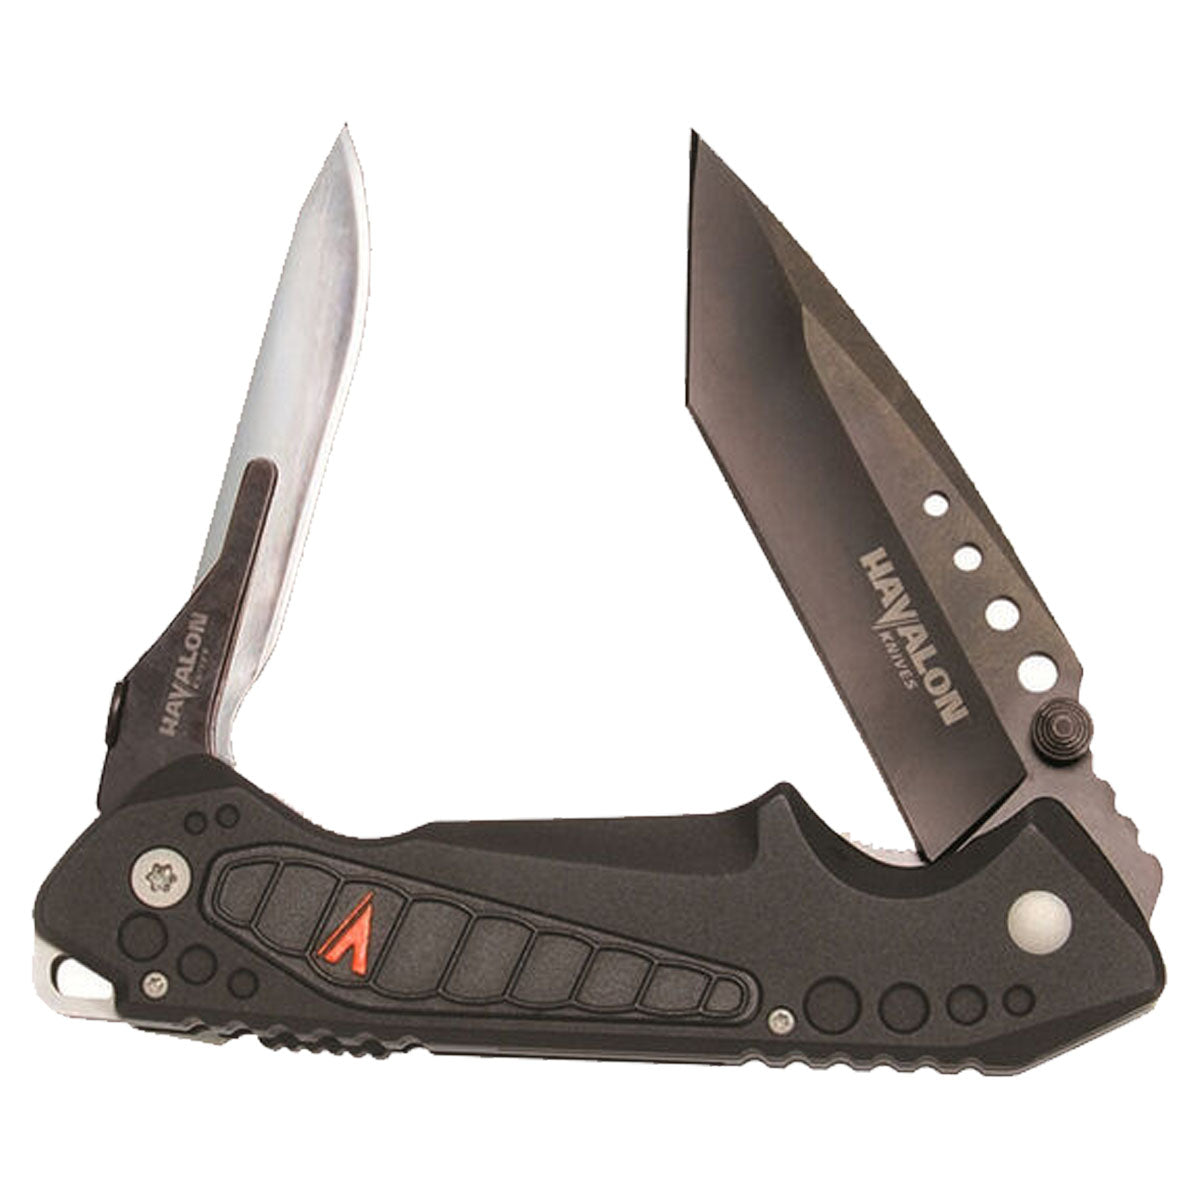 Havalon EXP folding Combo in  by GOHUNT | Havalon Knives - GOHUNT Shop